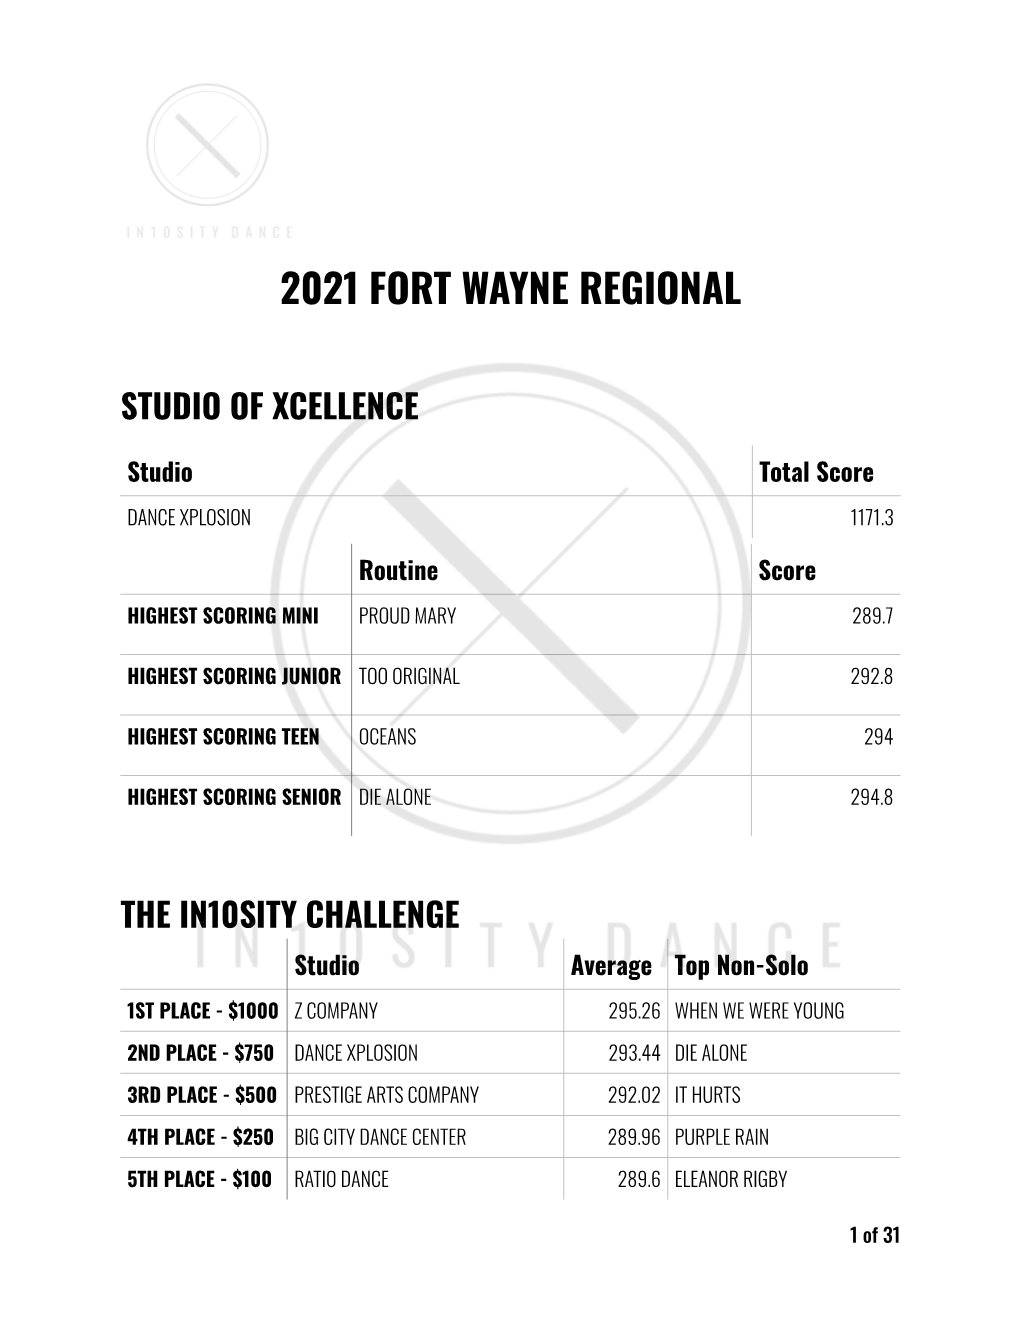 Ft Wayne Results